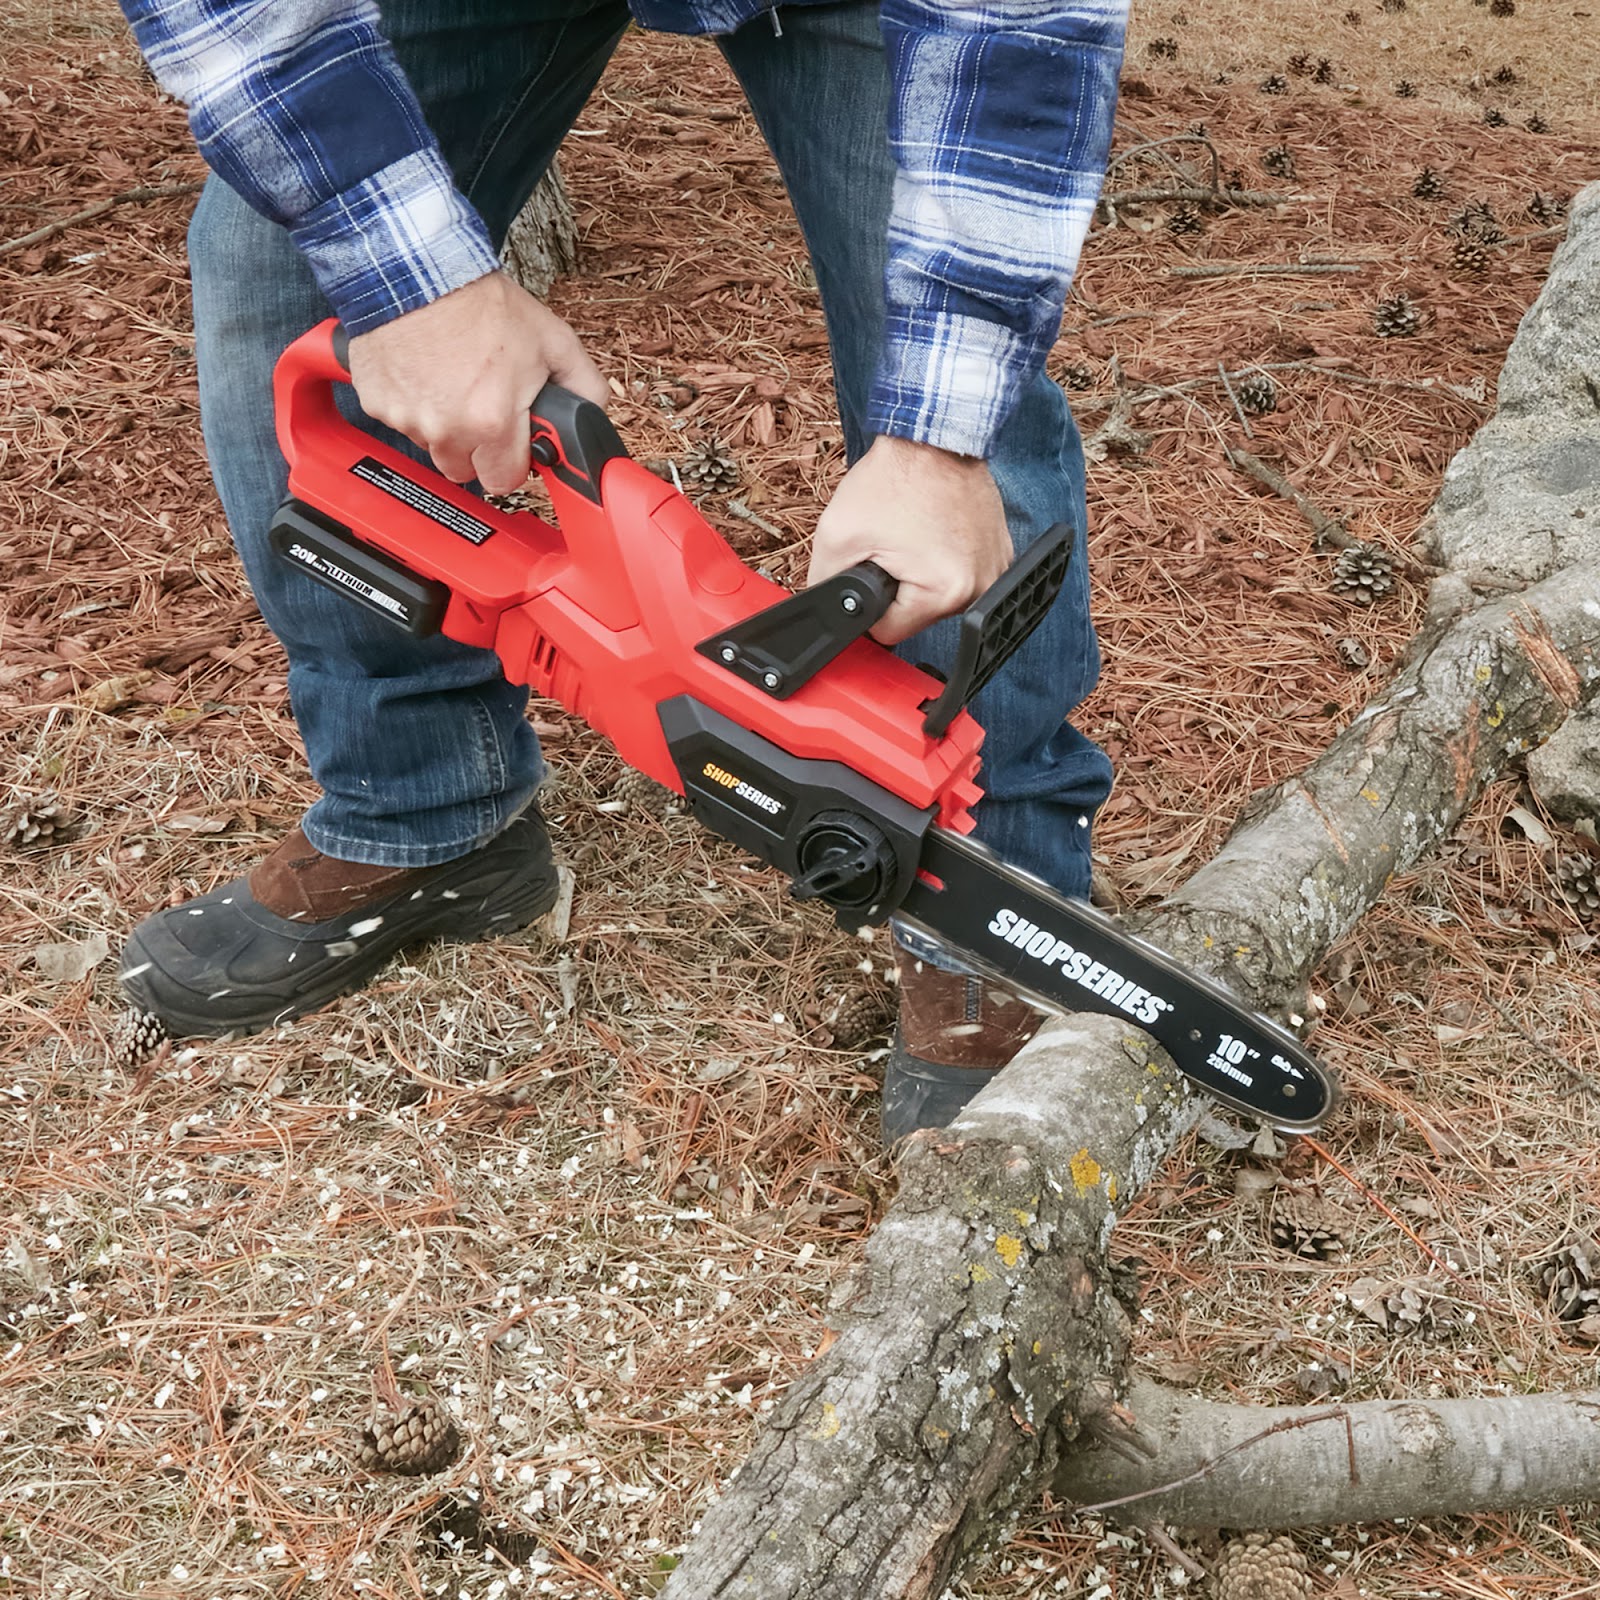 Red chain saw cutting through wood